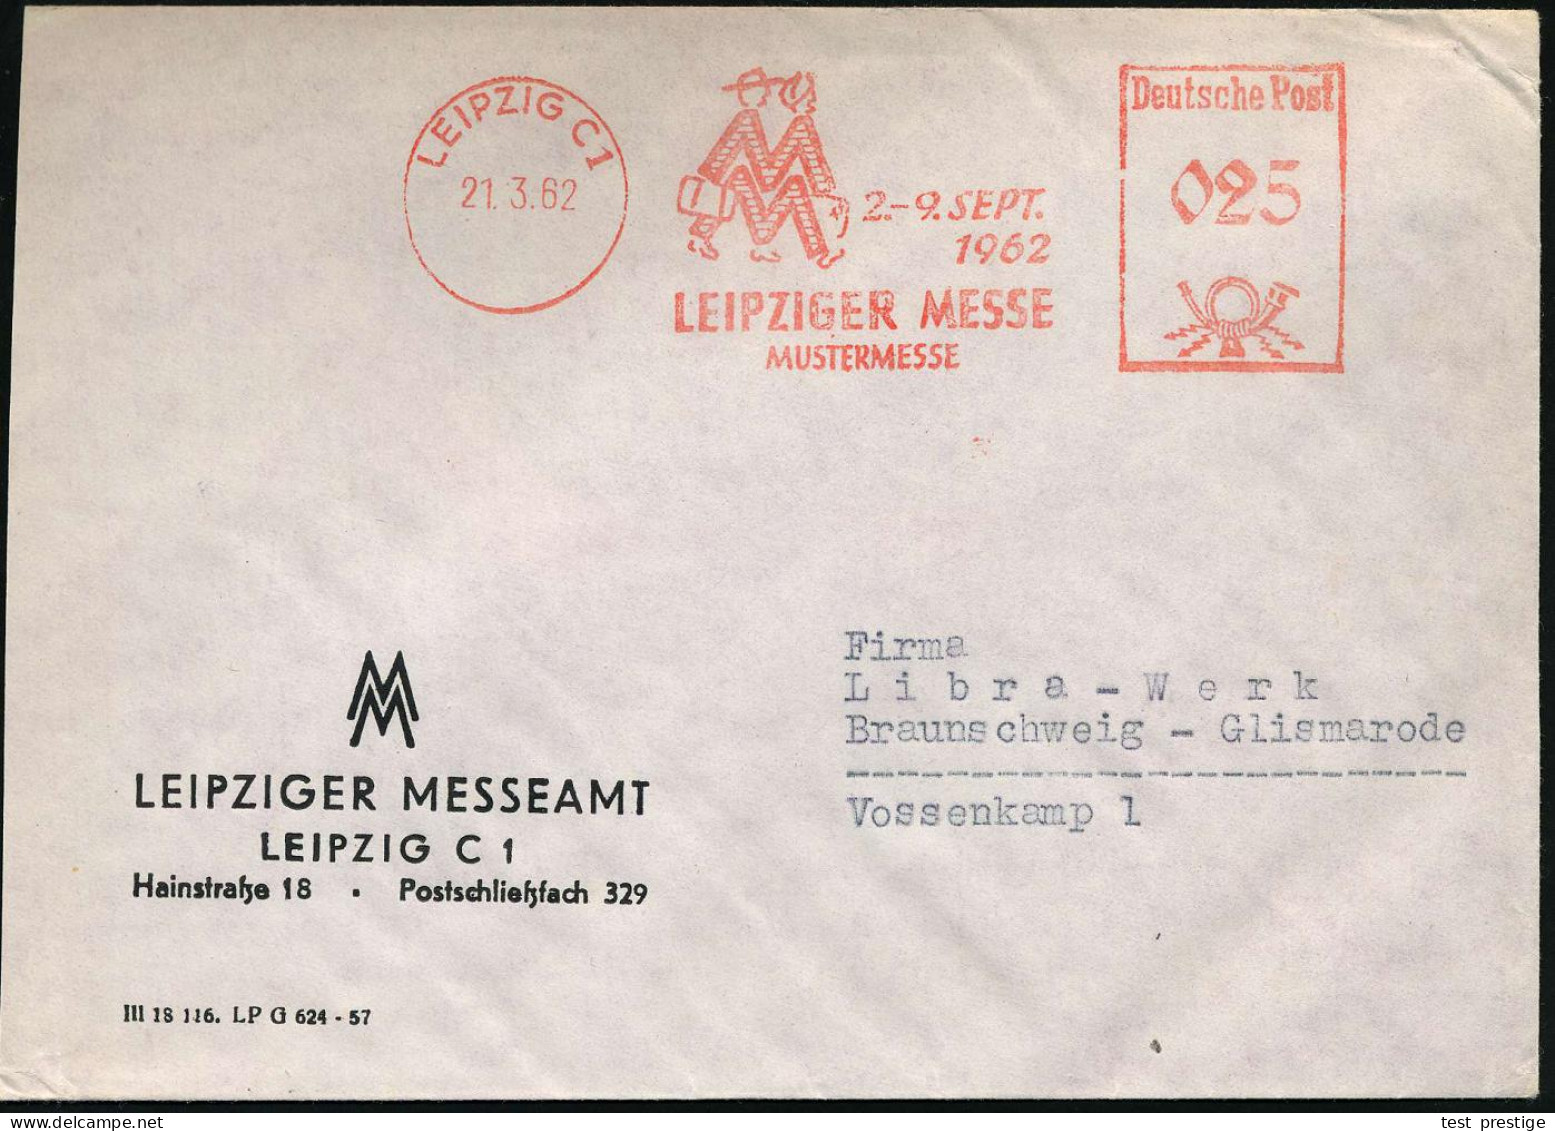 LEIPZIG C1/ 2.-9.SEPT./ 1962/ LEIPZ.MESSE/ MUSTERMESSE 1962 (21.3.) AFS Francotyp 025 Pf. (Messe-Logo: 2 Kofferträger) D - Sonstige